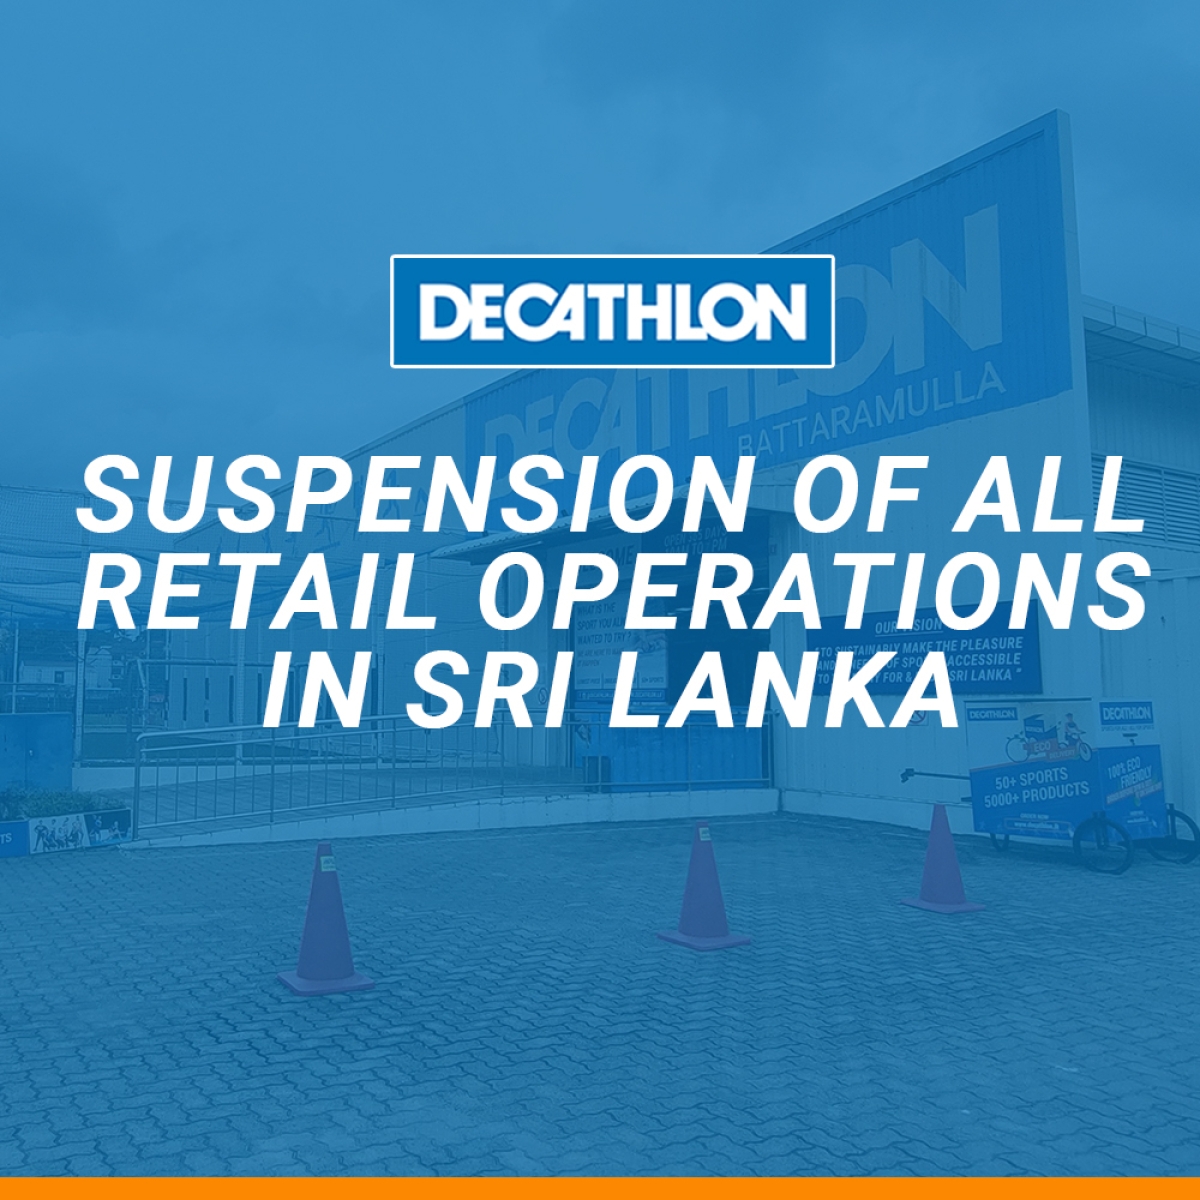 Sporting goods retailer Decathlon suspends operations in Sri Lanka